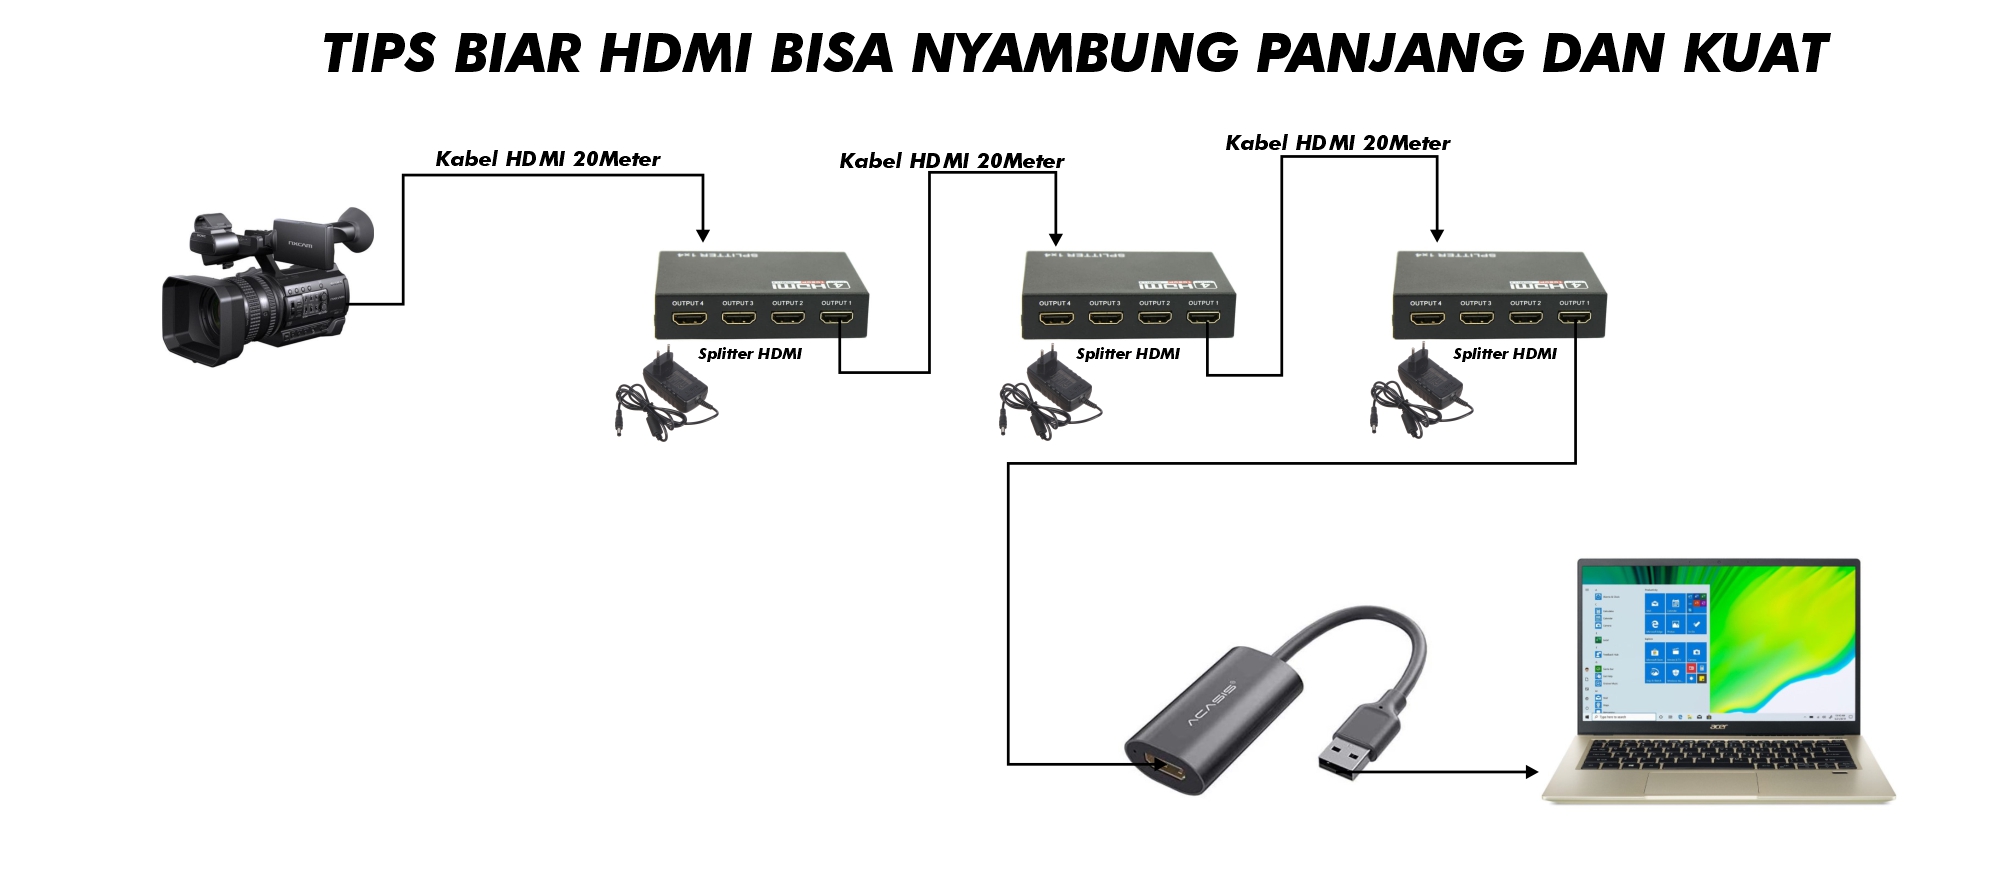 Cara Menyambungkan Kabel HDMI Biar Panjang